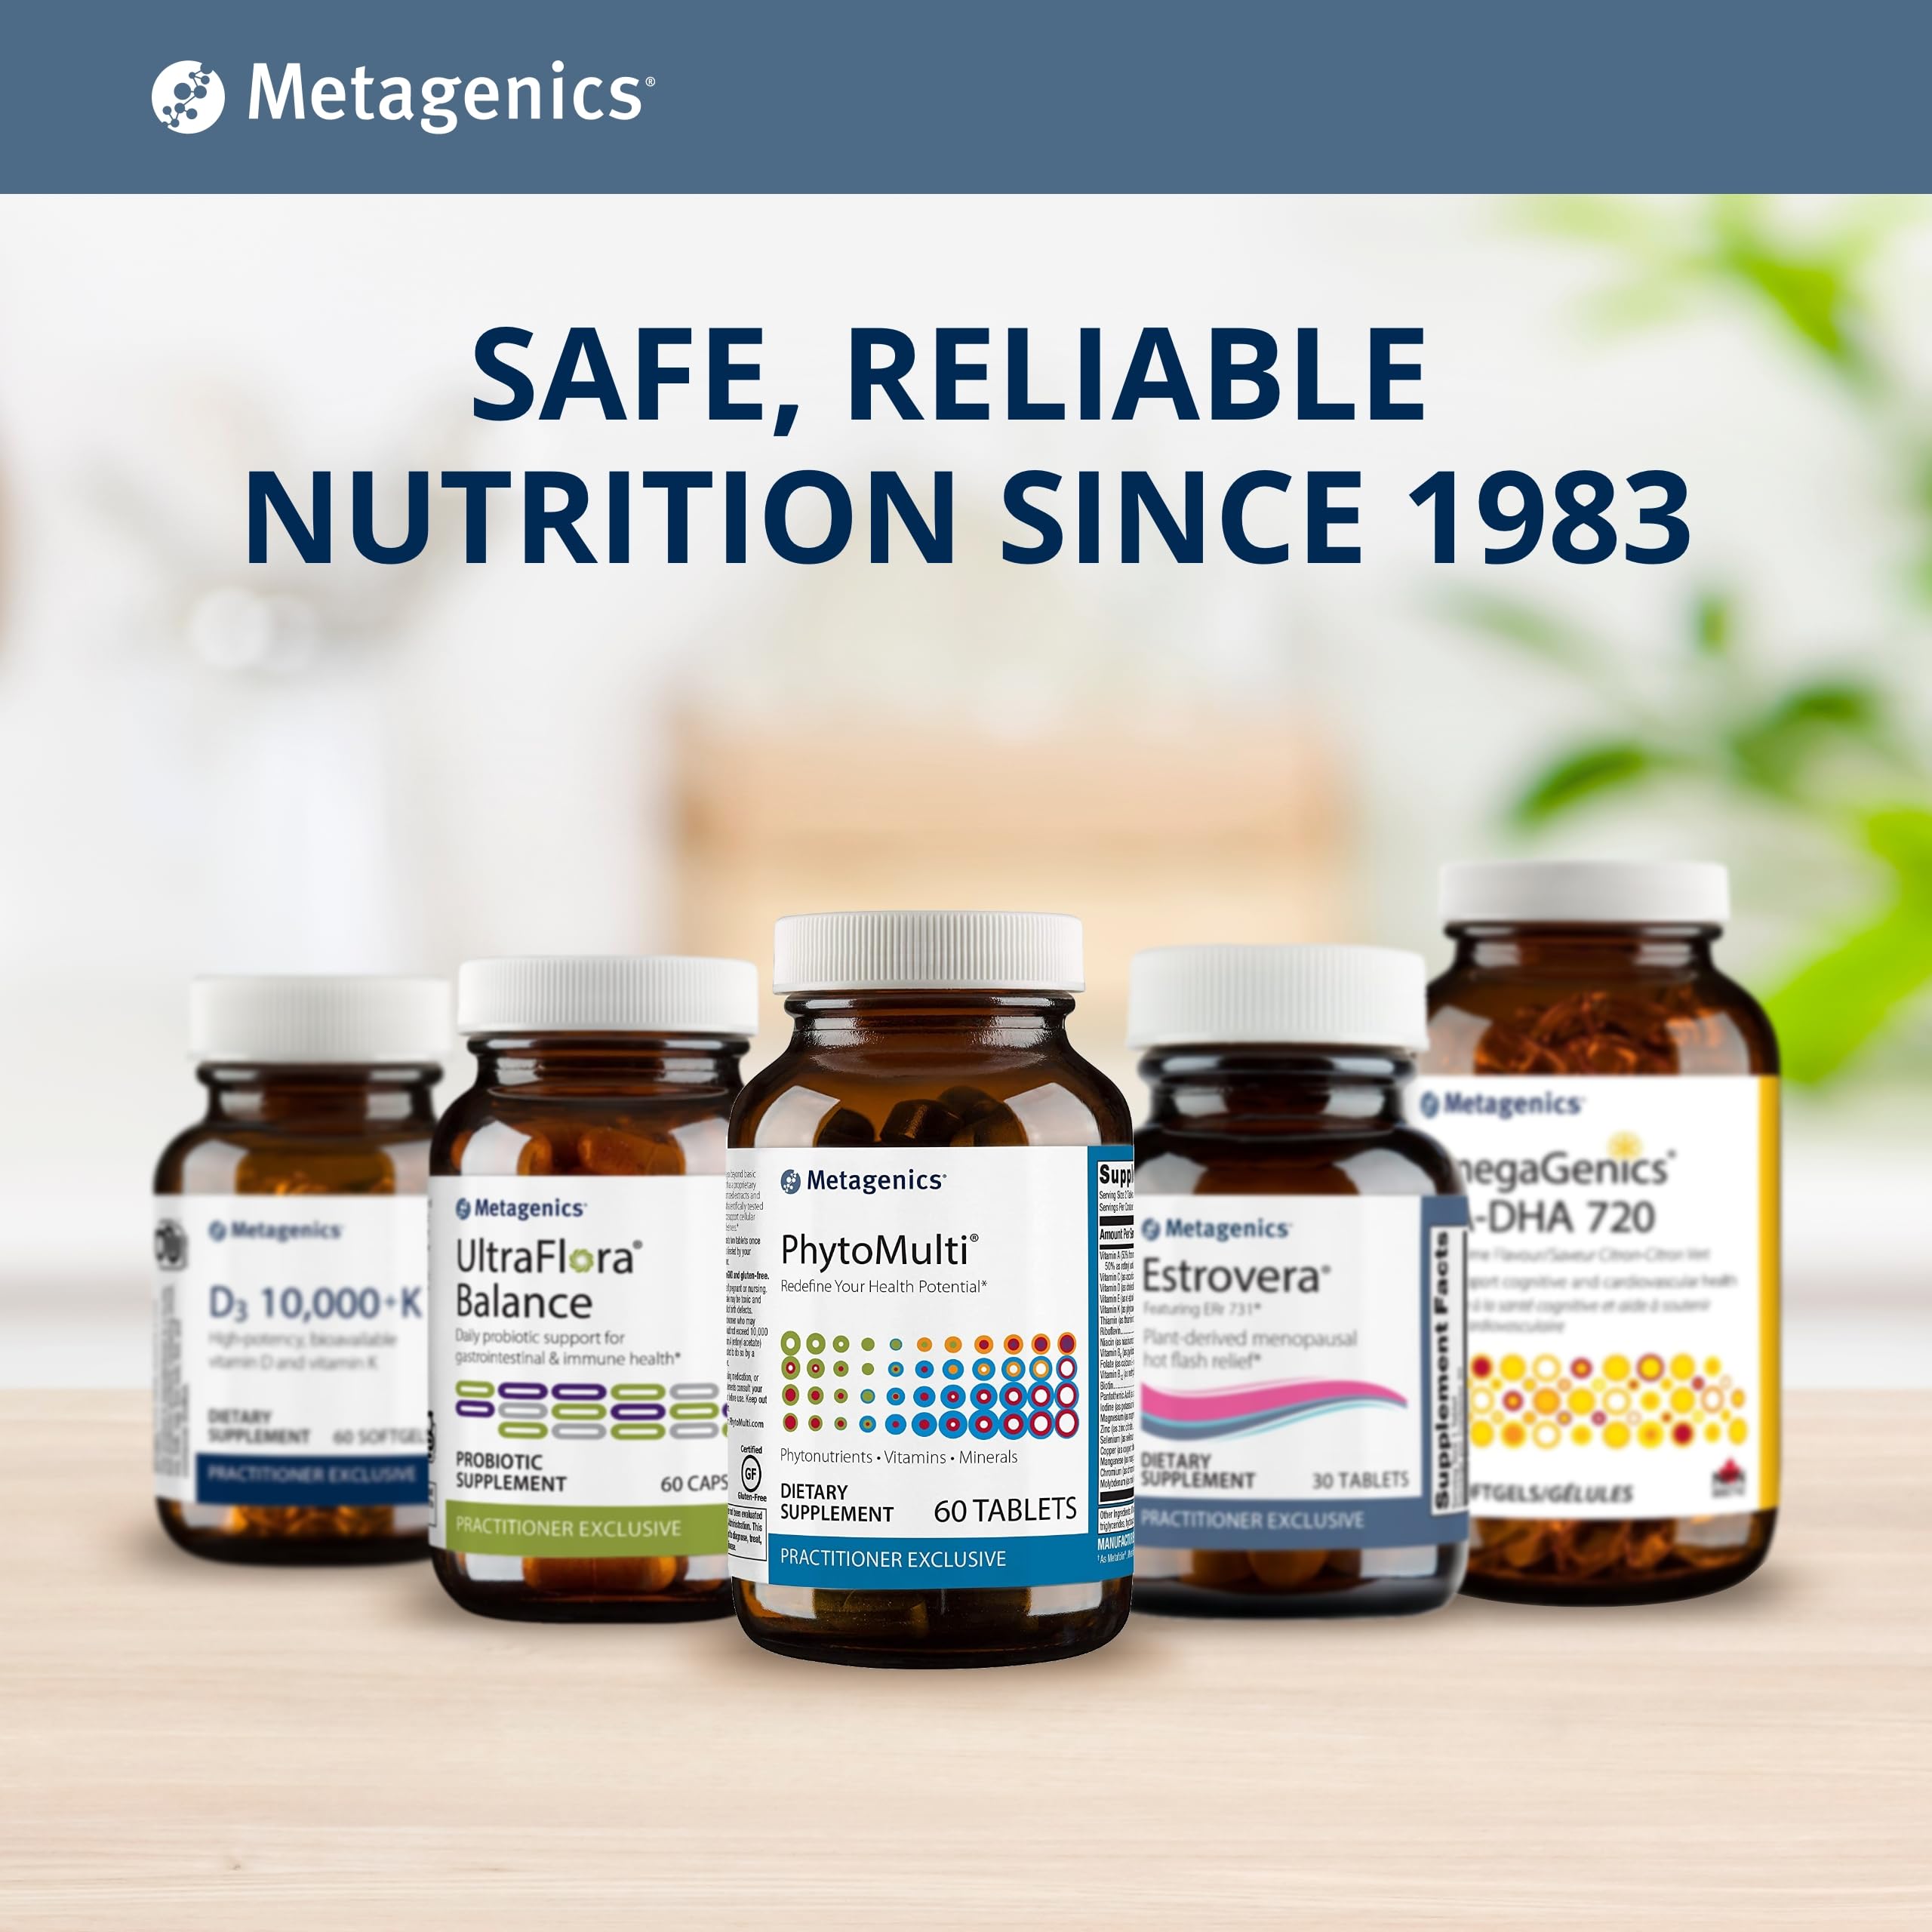 Metagenics Wellness Essentials Pregnancy - 30 Packets